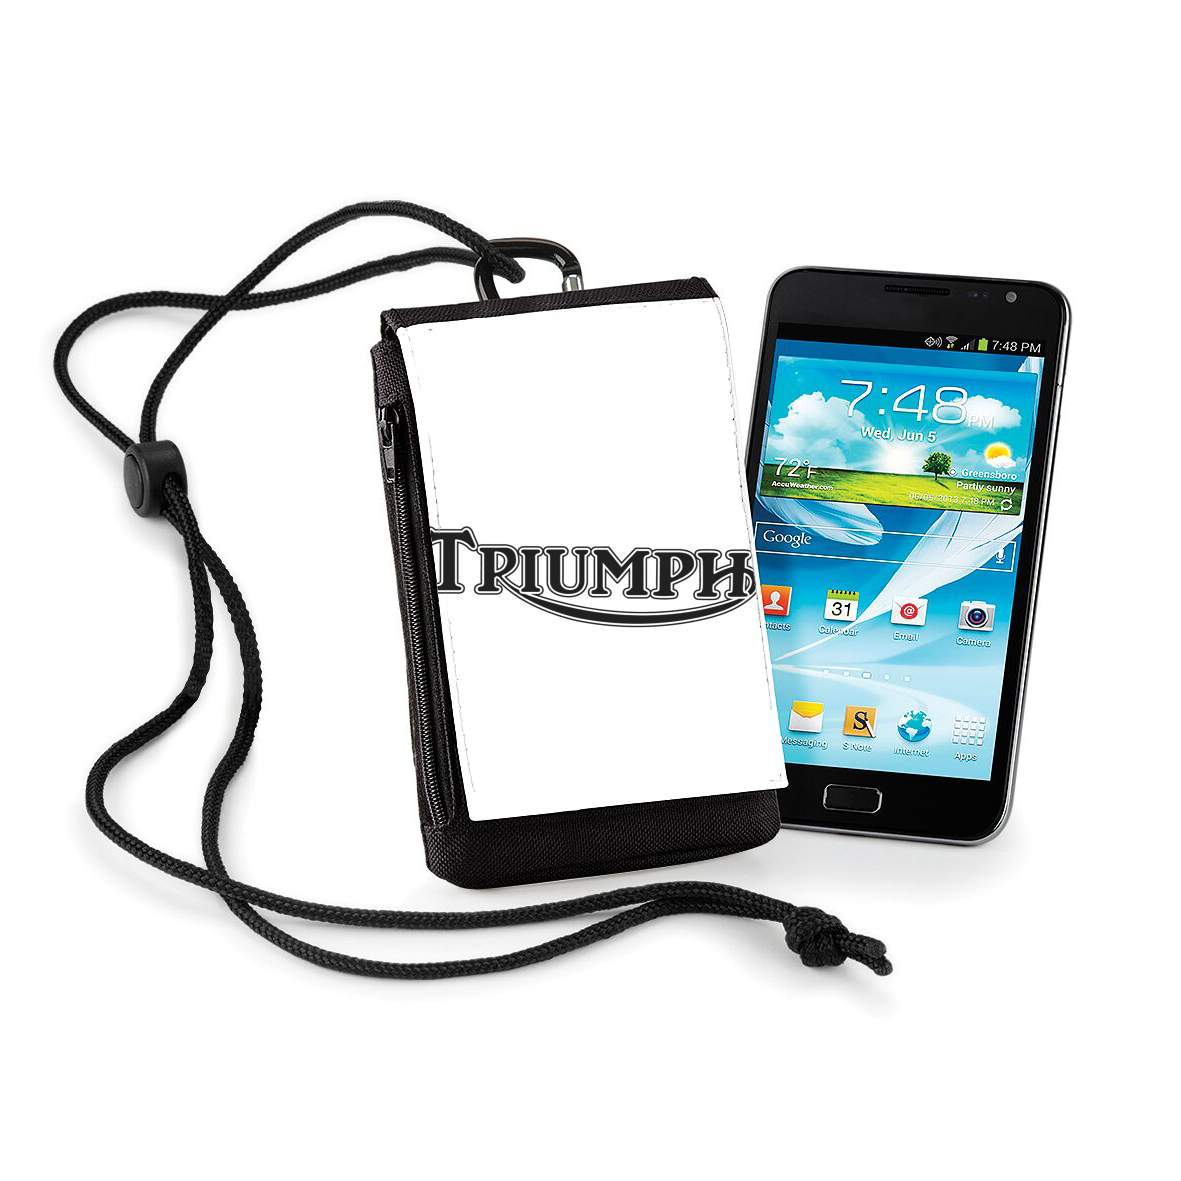 Coque protection iPhone Triumph - Super Fabrique